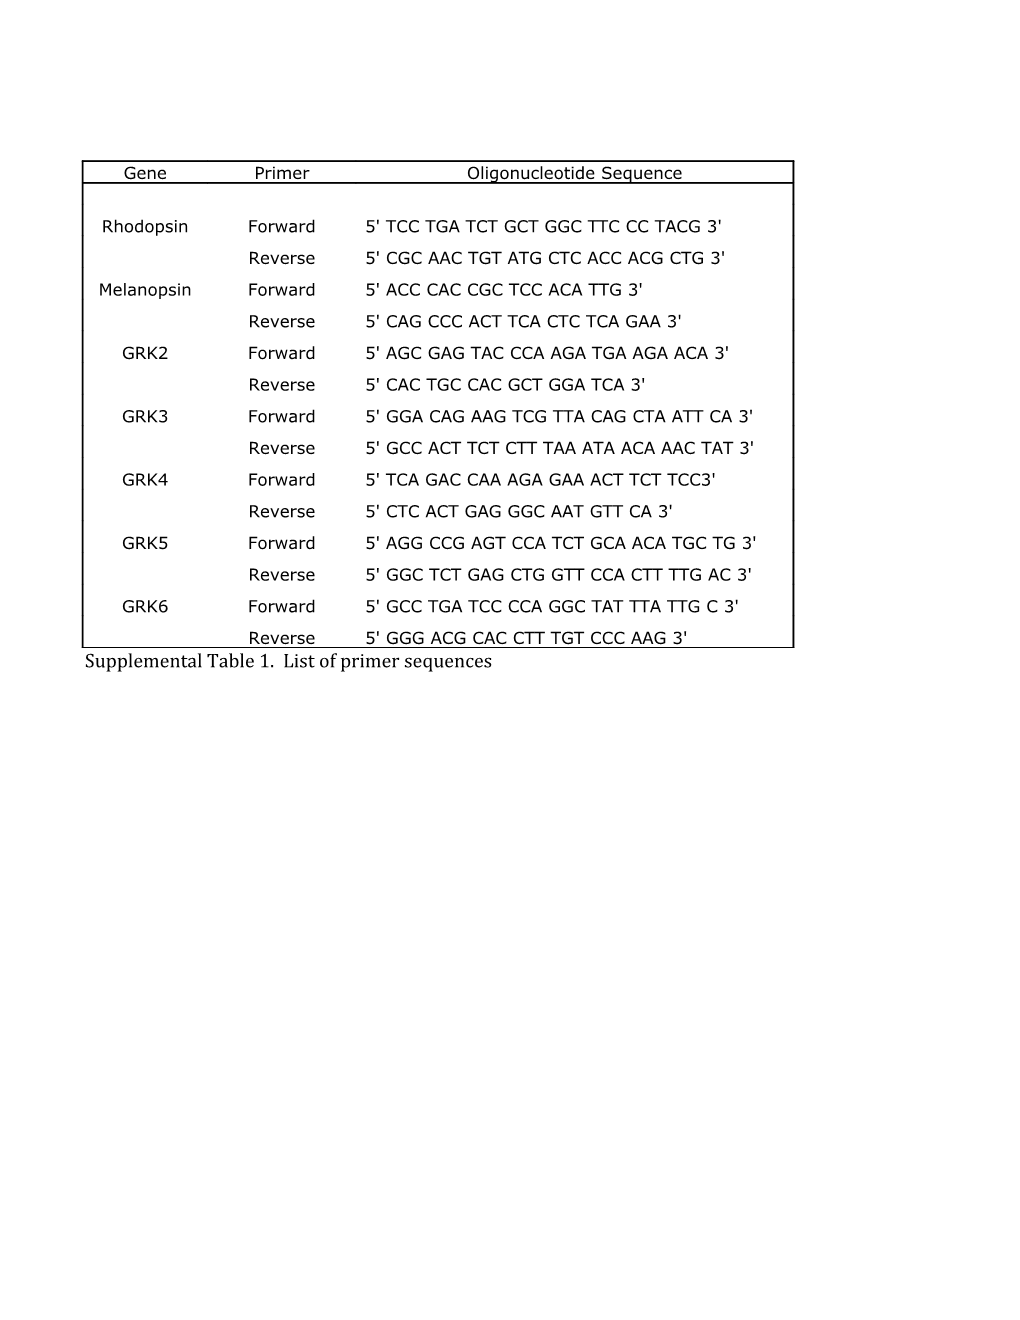 Supplemental Table 1. List of Primer Sequences Supplemental Figure 1